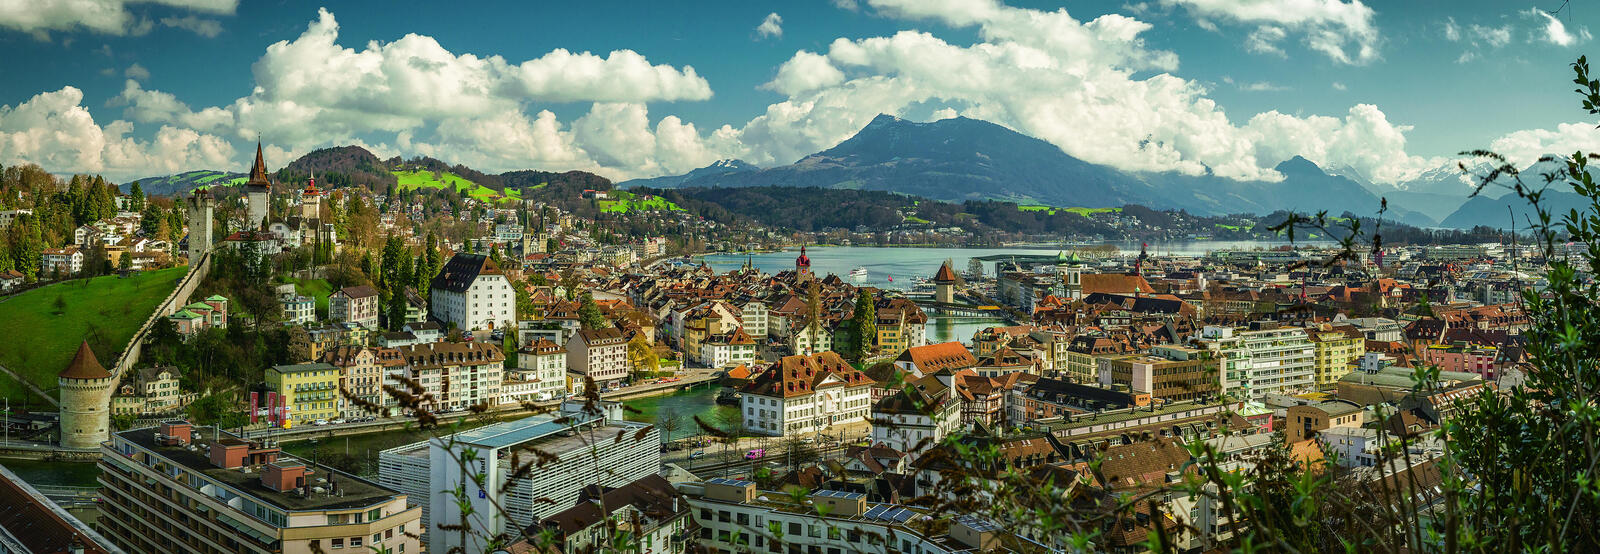 Wallpapers Panorama Lucerne Switzerland on the desktop